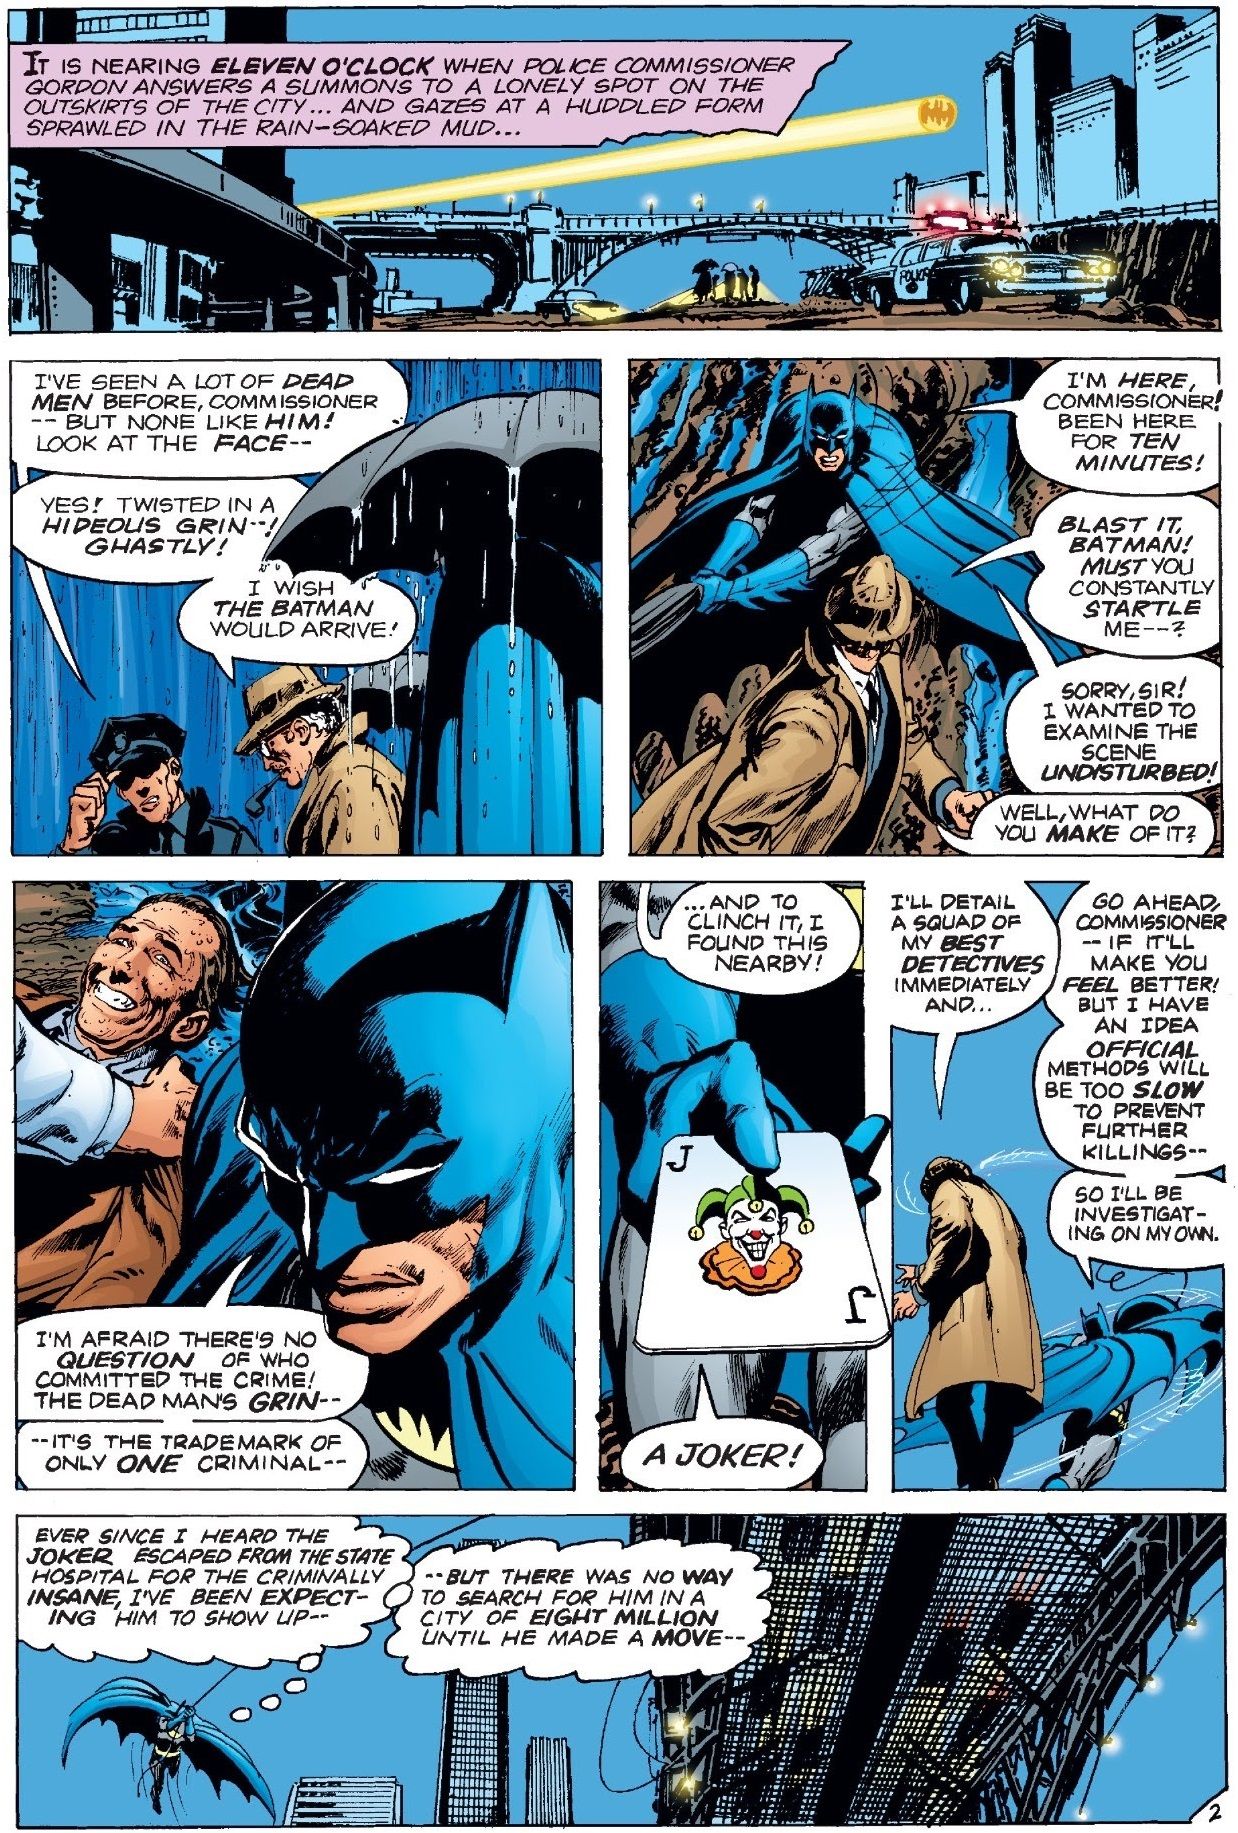 The Joker's first kill in Batman #251